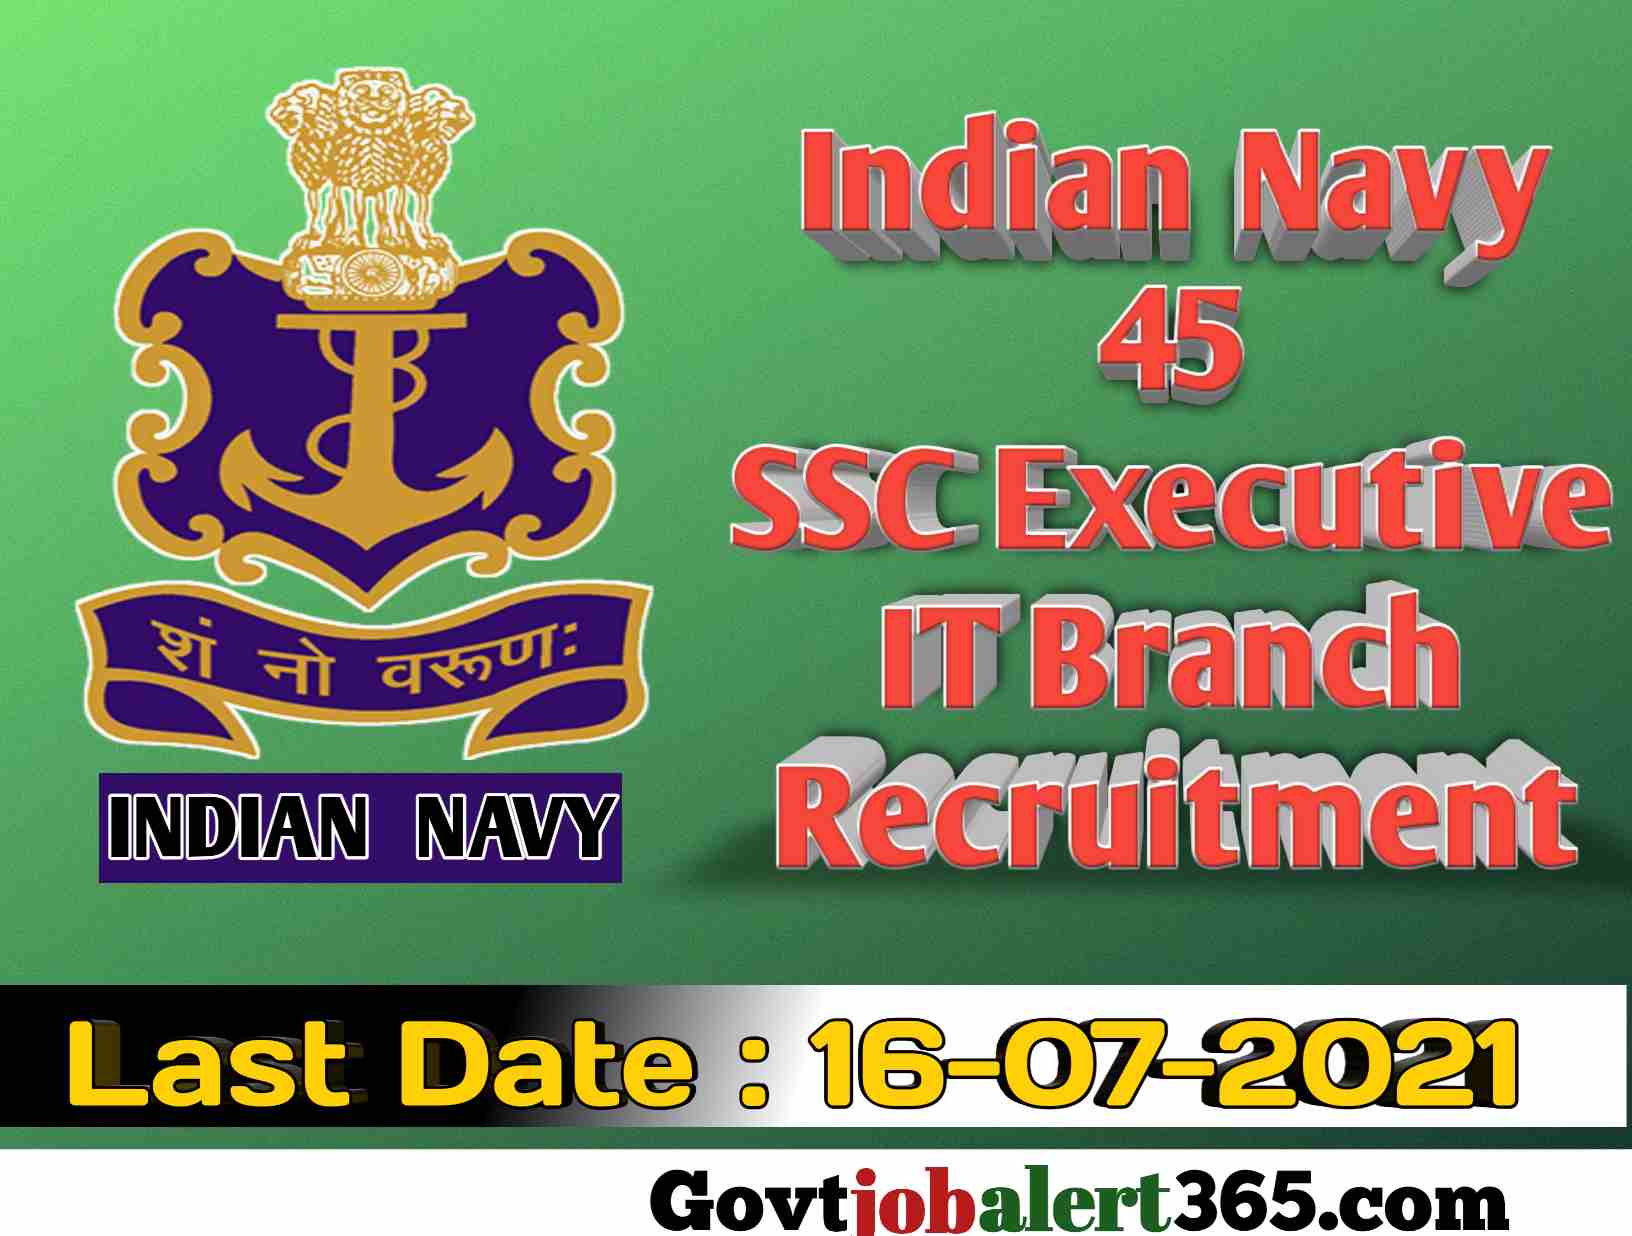 Indian Navy SSC Executive IT Branch Recruitment 2021